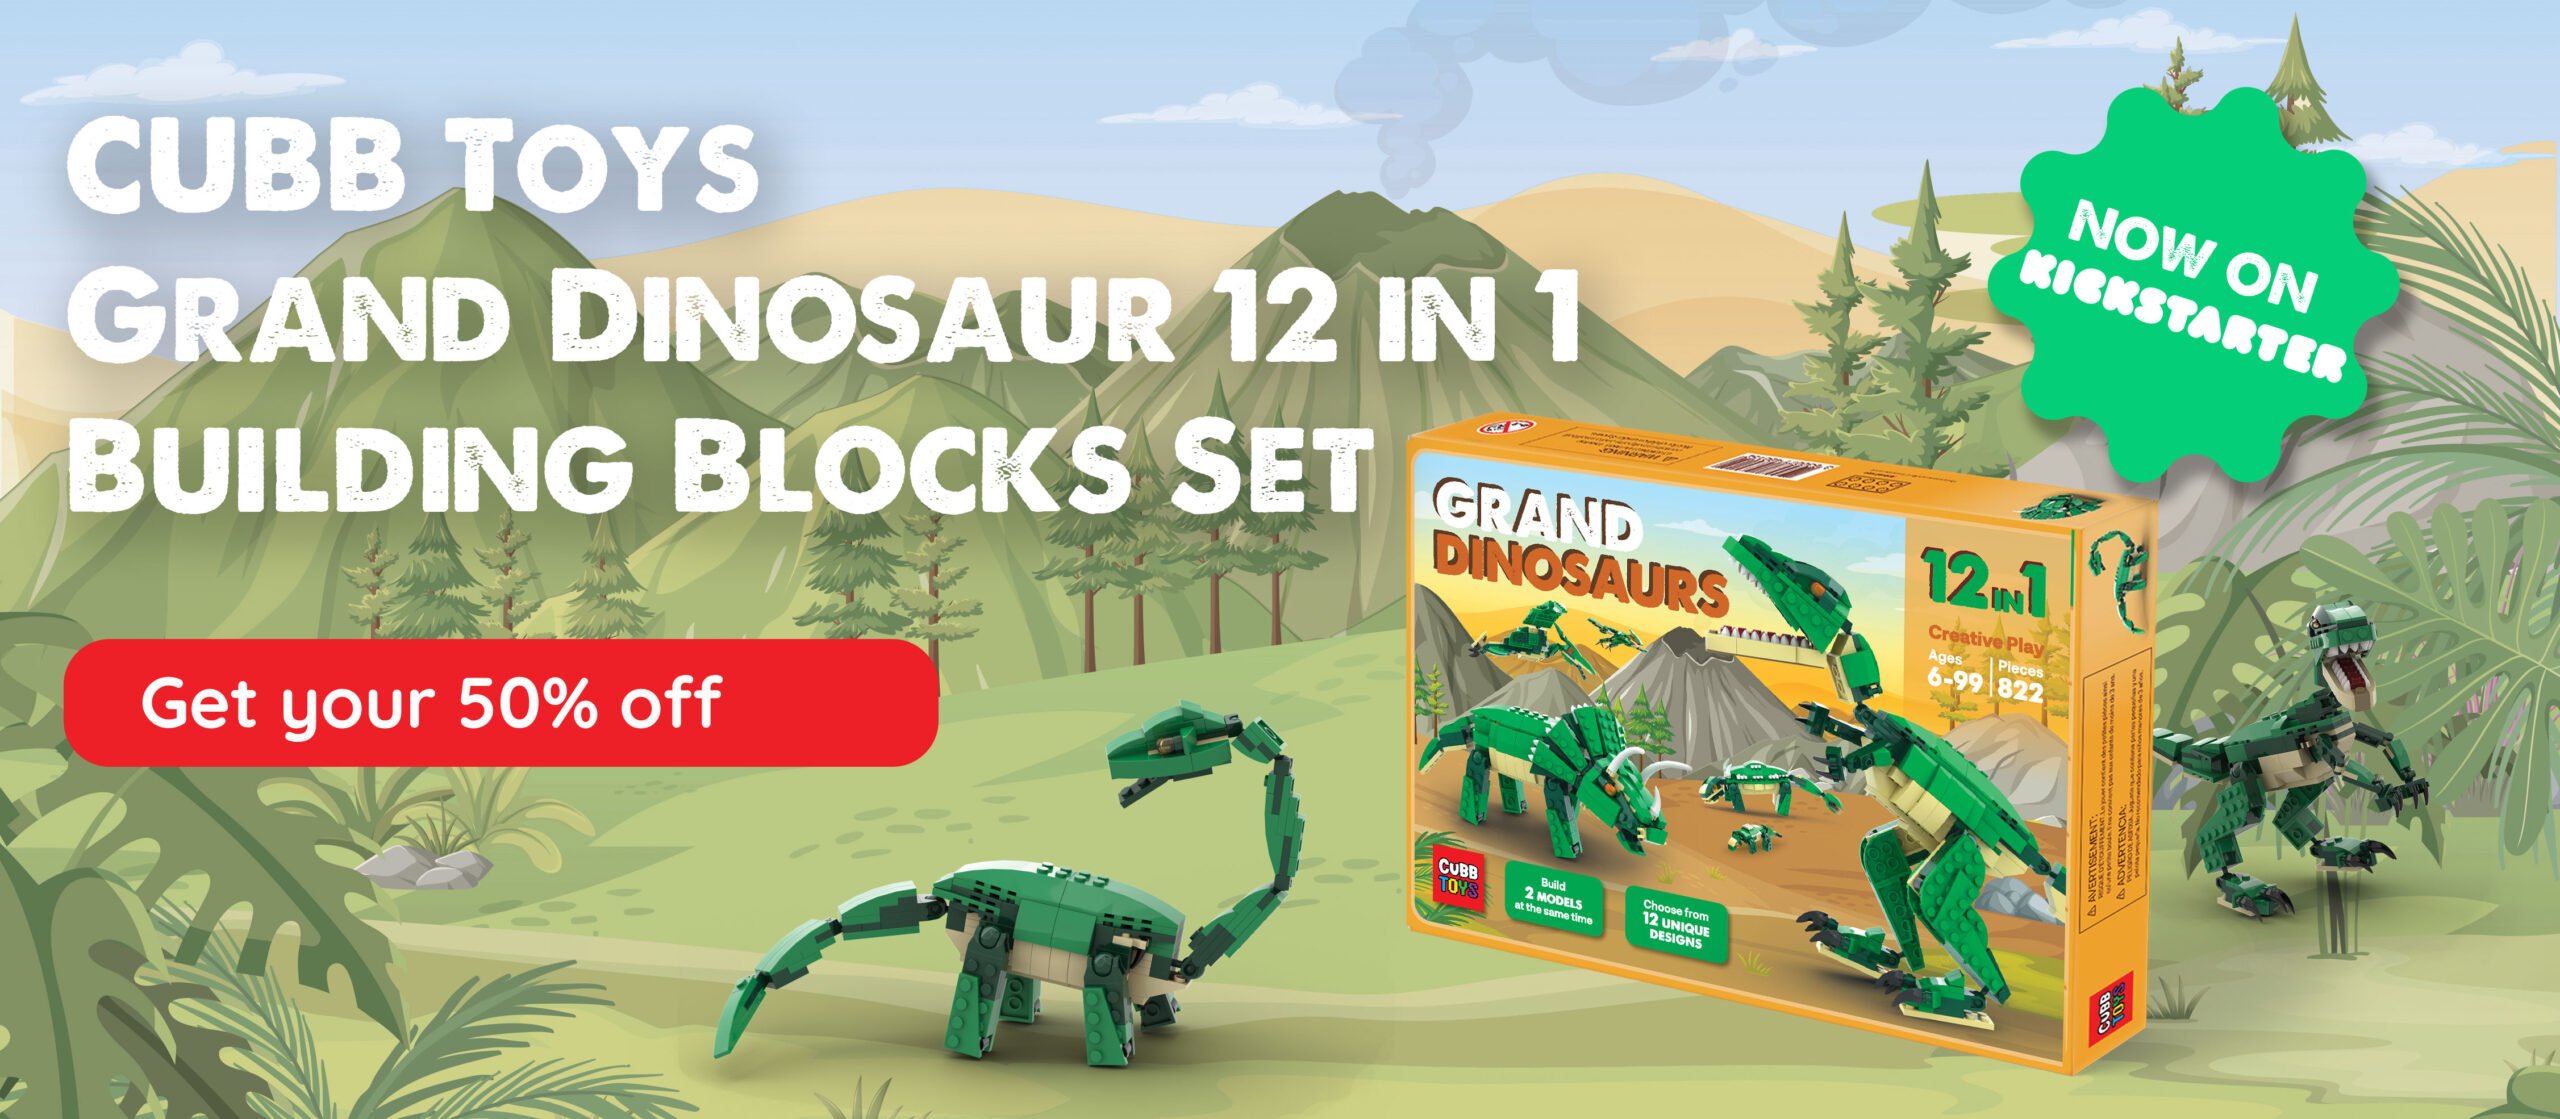 CUBB Toys Grand Dinosaur 12 in 1 Building Blocks Set